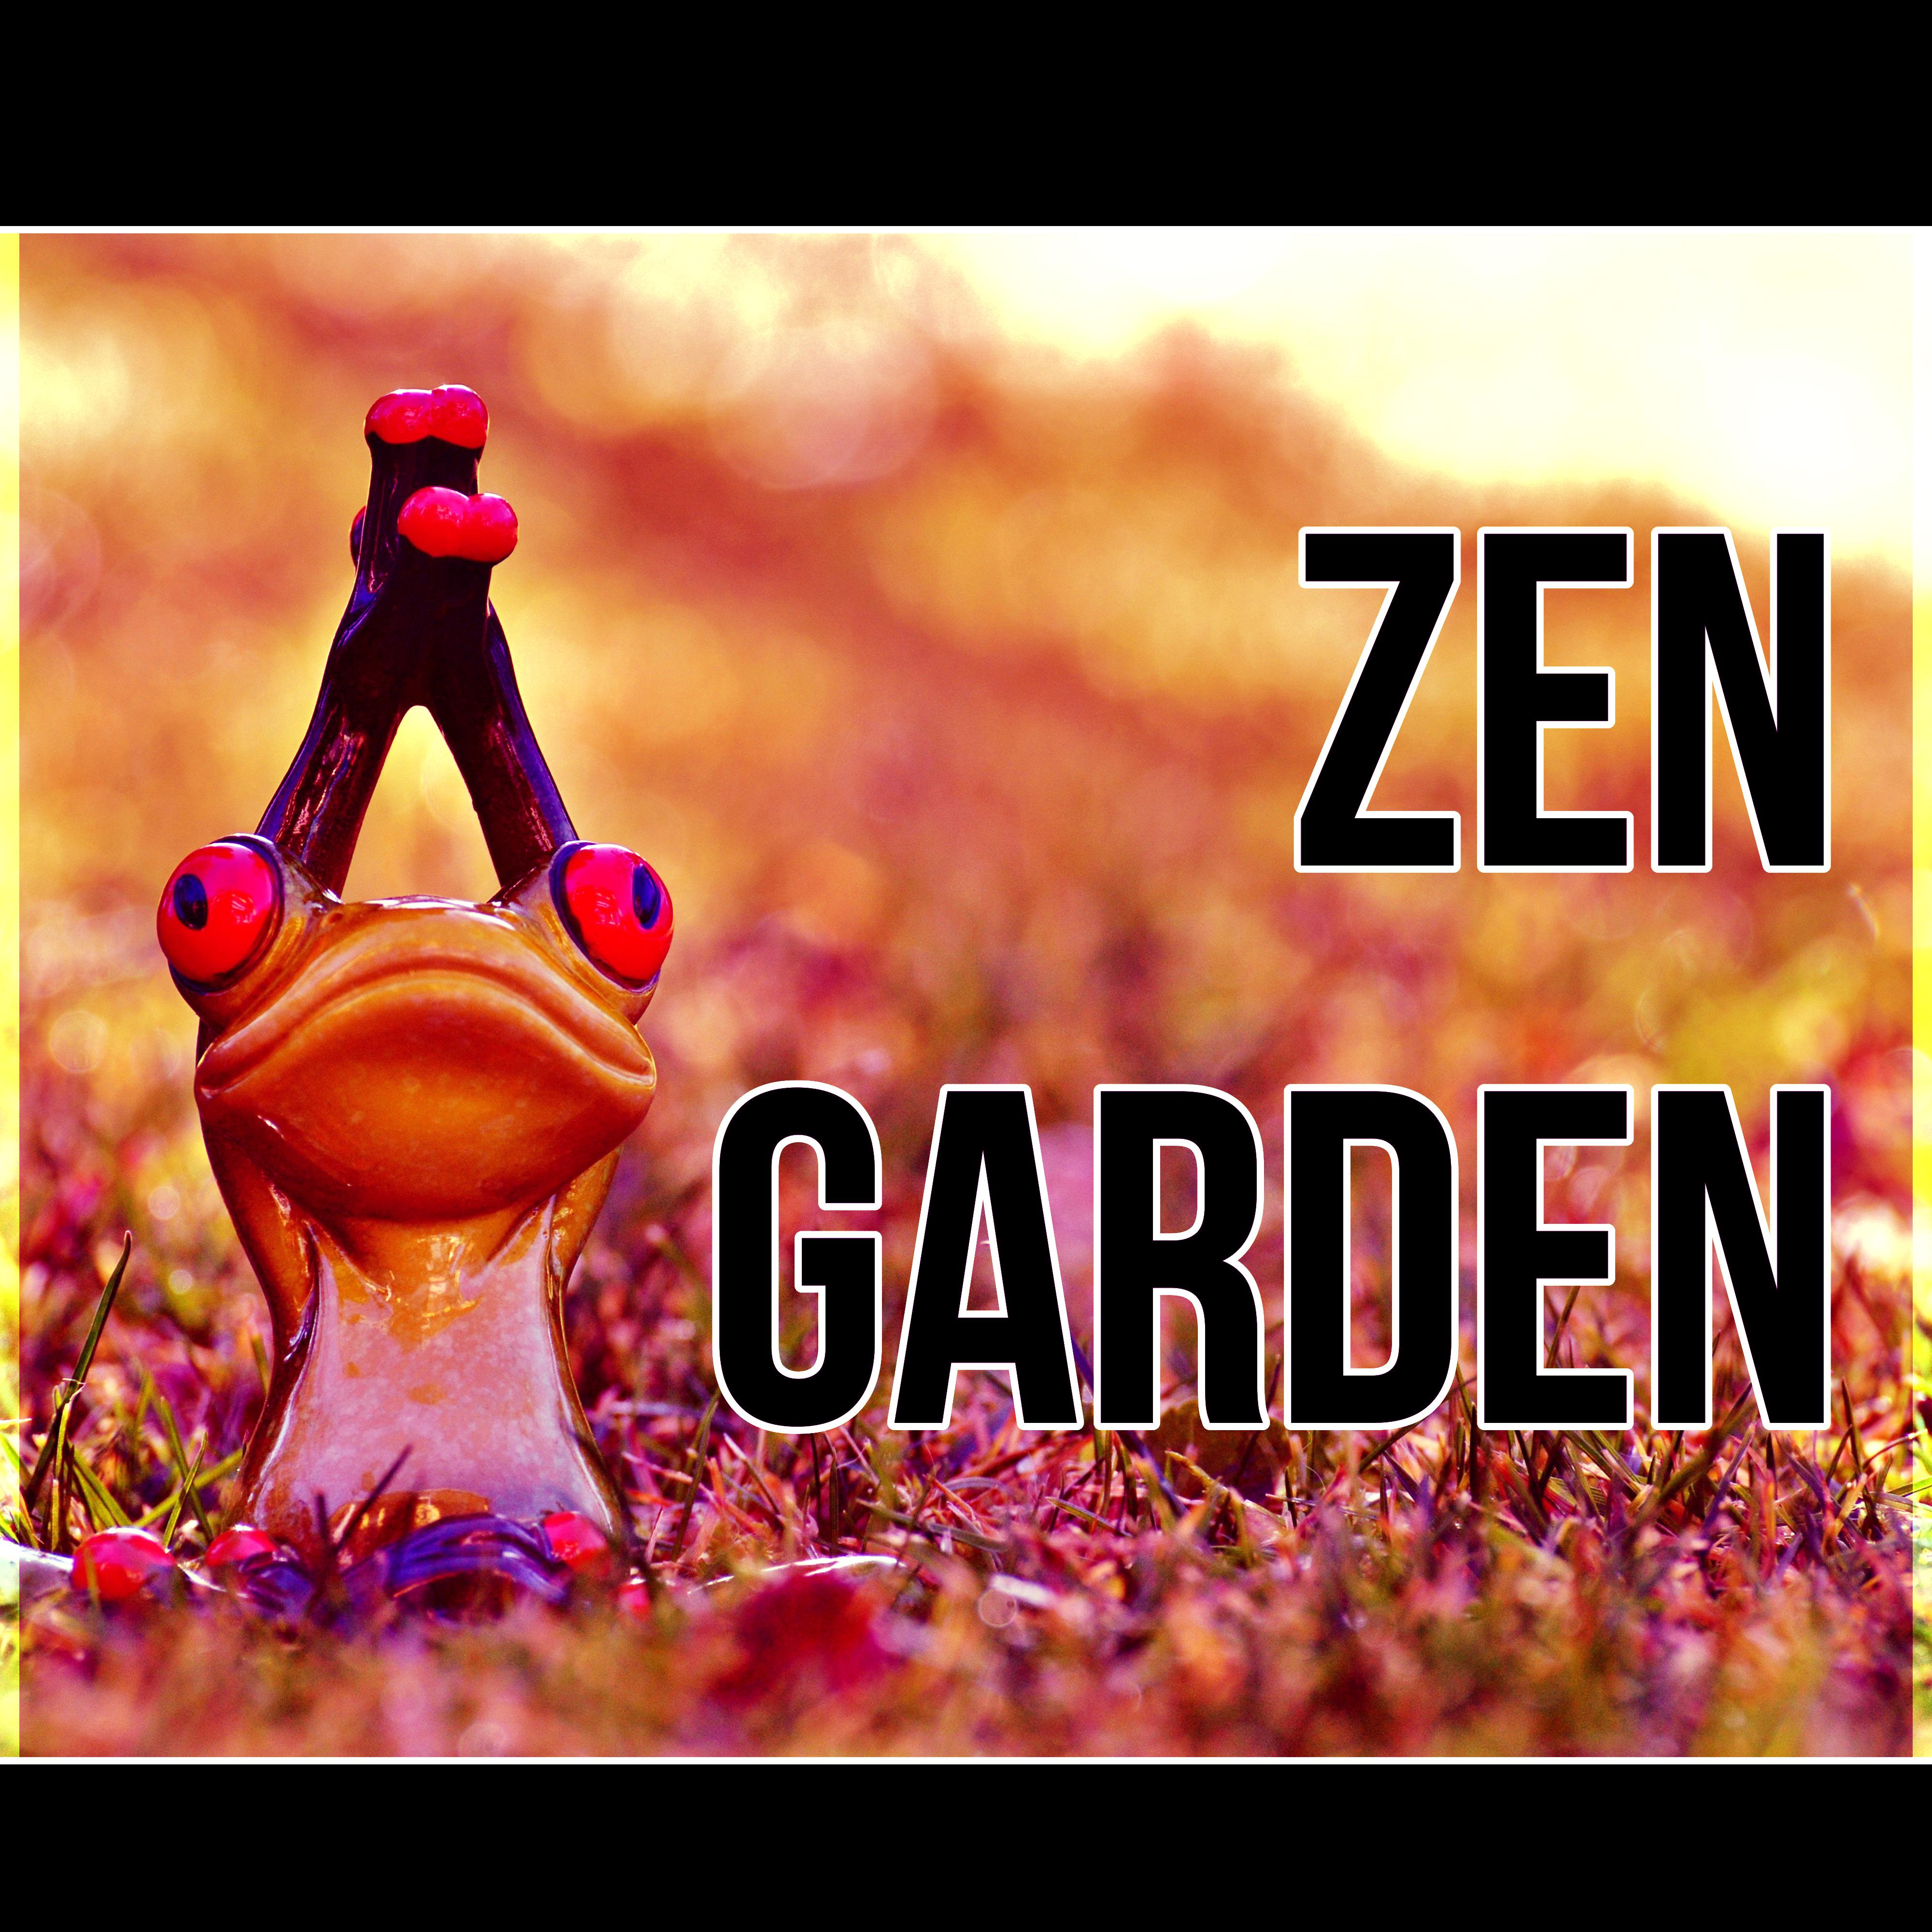 Zen Garden – Basic Transcendental Meditation for Beginners with Nature Sounds, Ocean Sounds for Yoga Class & Mindfulness Meditation, Zen, Reiki, Sleep